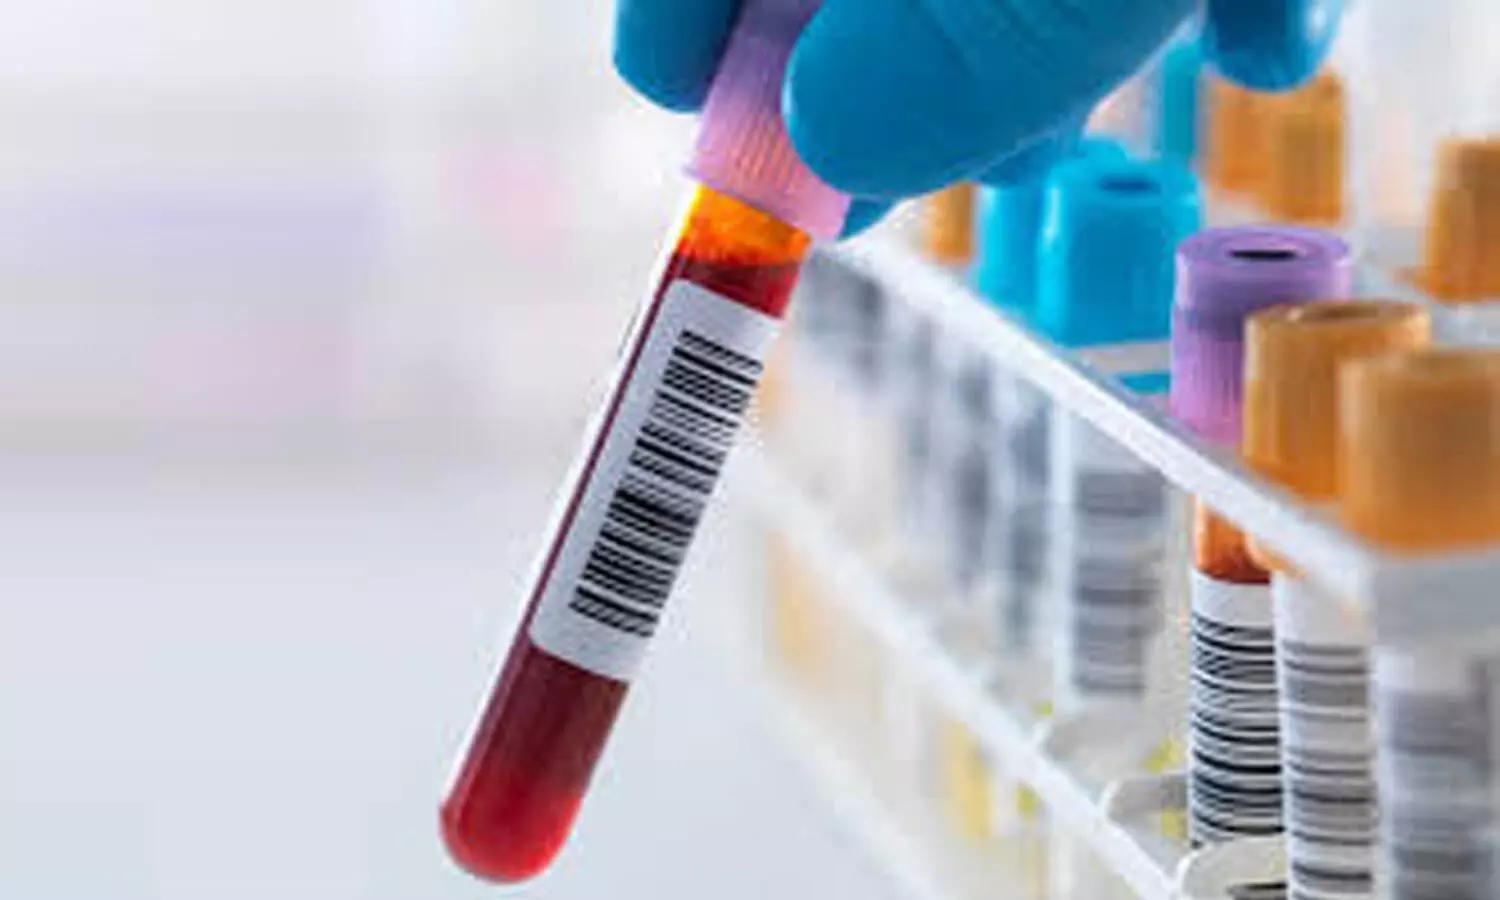 Maha FDA seizes in-vitro diagnostic kits worth Rs 12.40 lakh in Thane